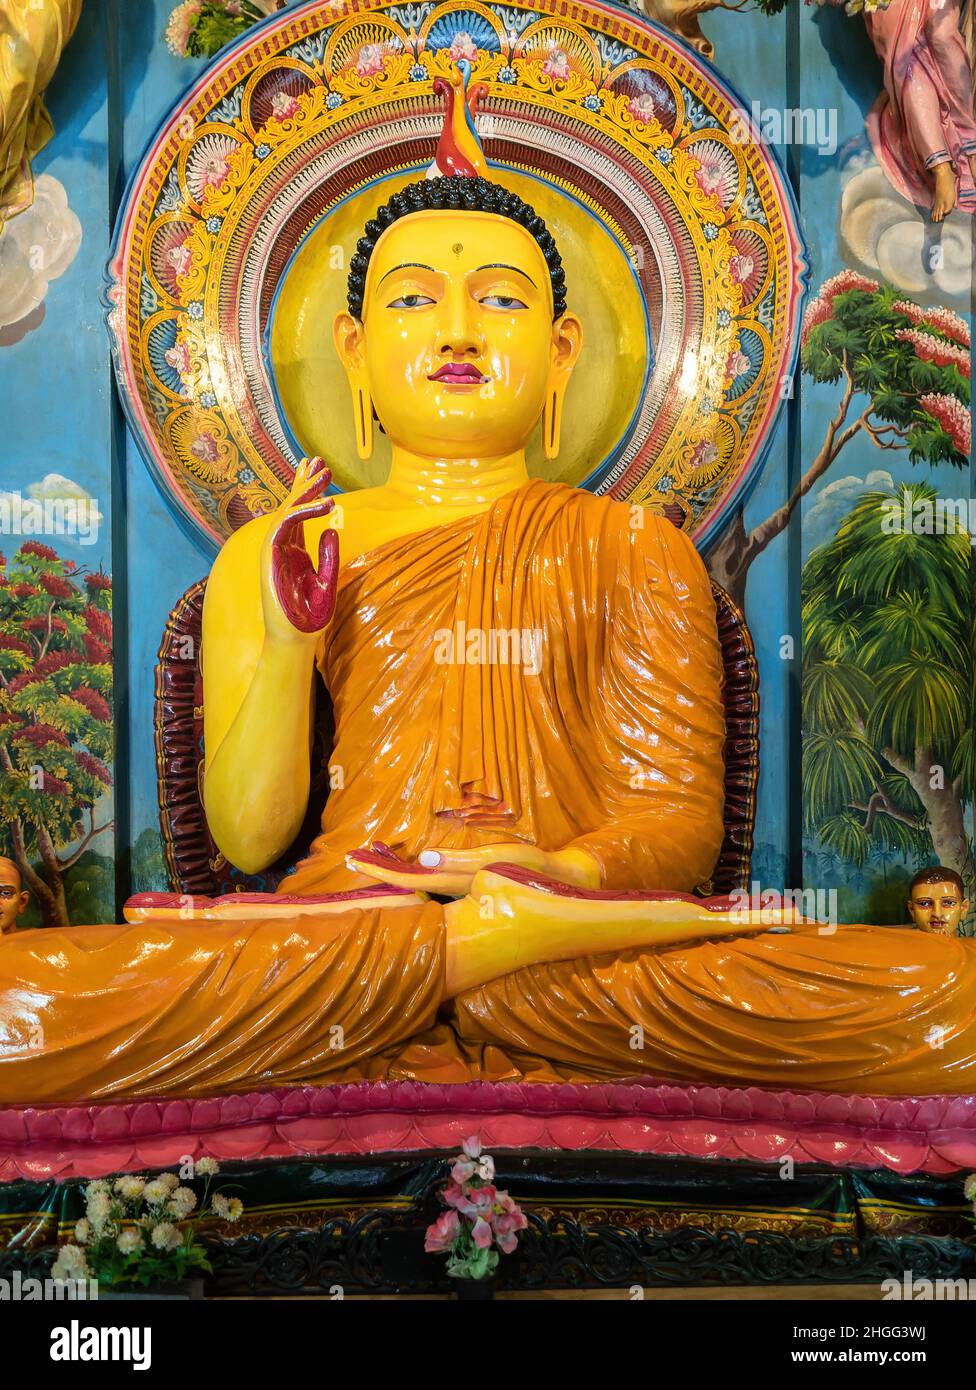 Buddha image at Asokaramaya Buddhist Temple, Colombo, Sri Lanka. Stock Photo